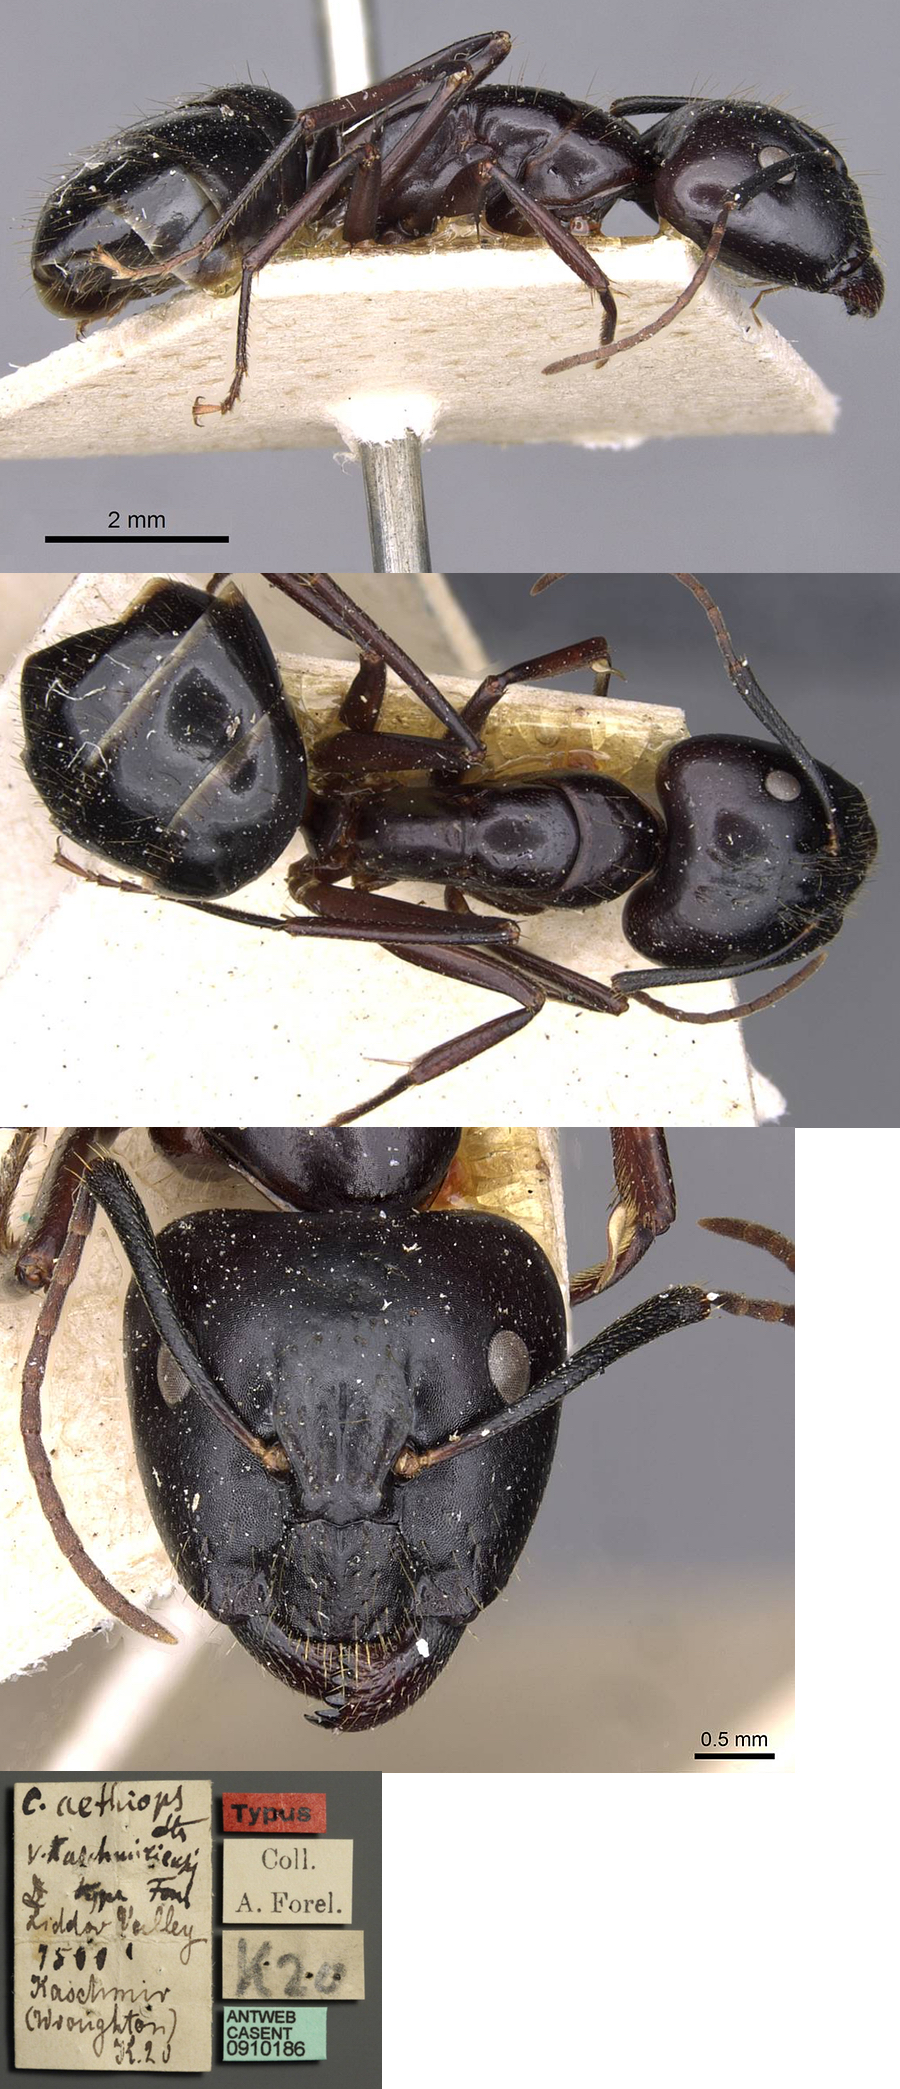 Camponotus aethiops cashmiriensis major